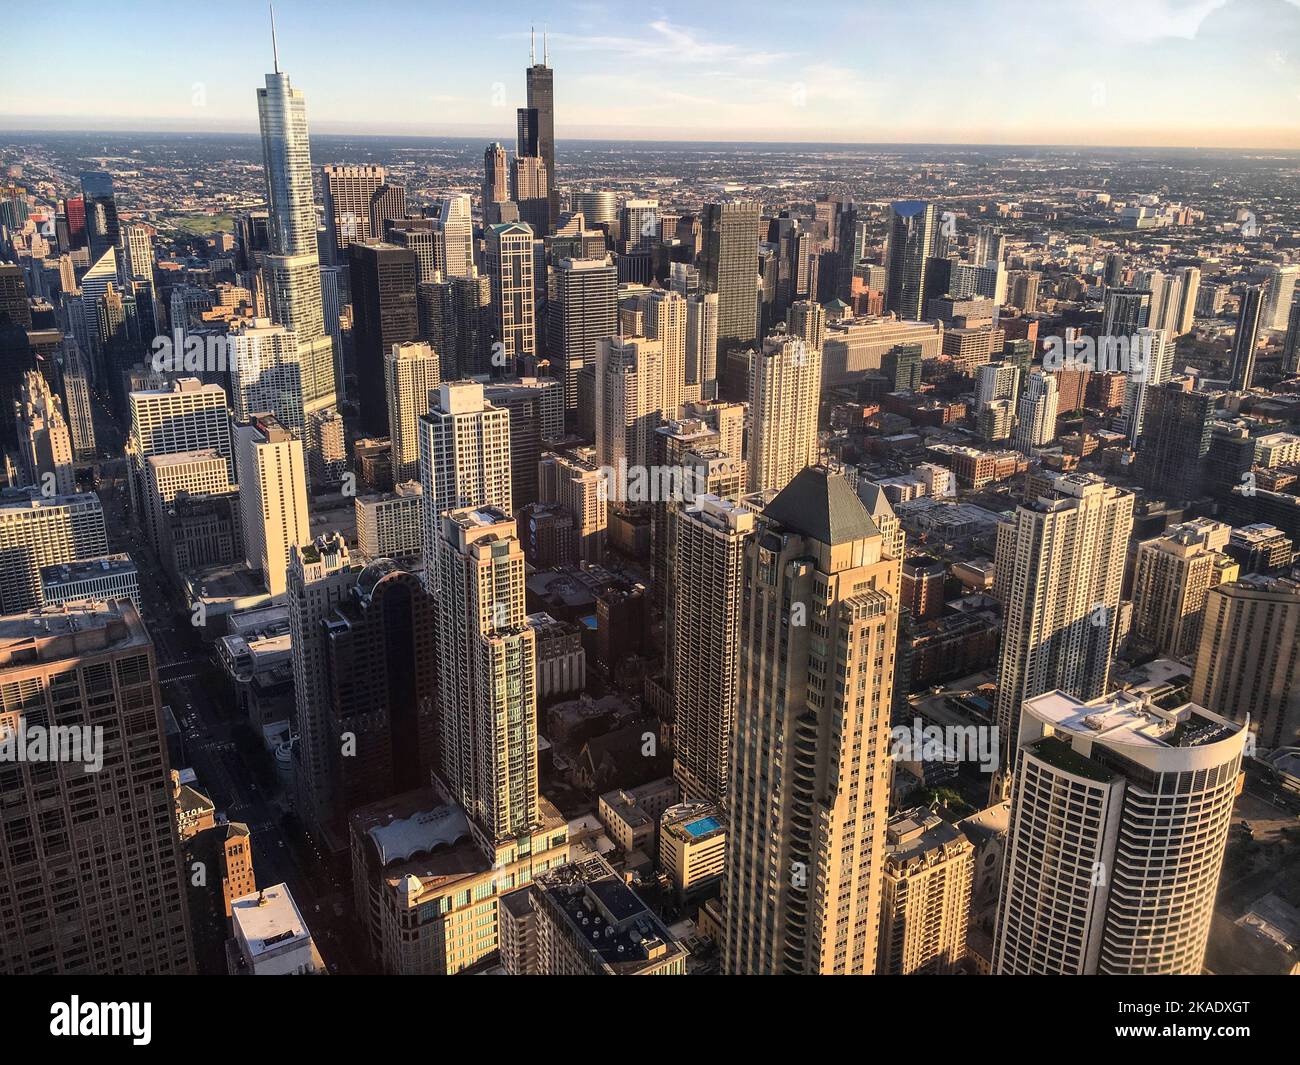 CHICAGO/ILLINOIS *** Local Caption *** Vue de la HANCOCK TOWER Stock Photo